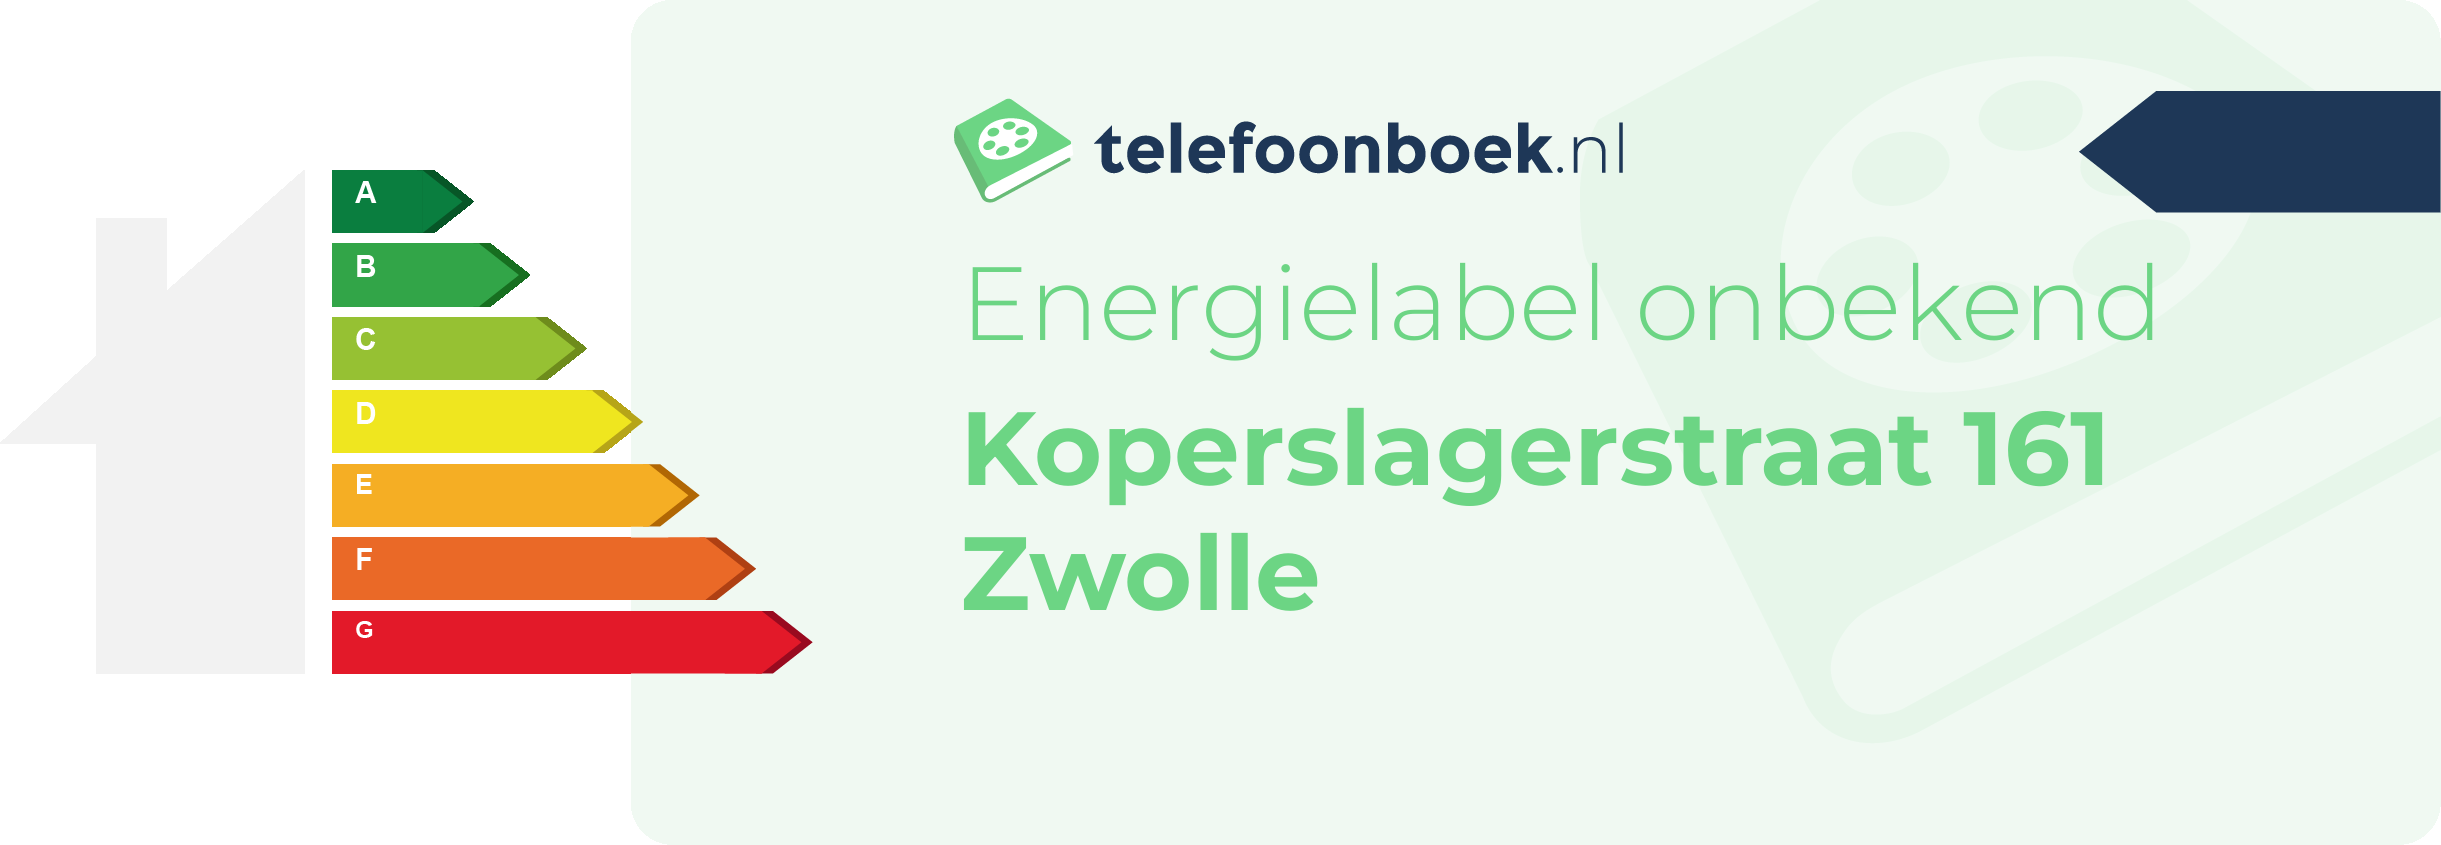 Energielabel Koperslagerstraat 161 Zwolle